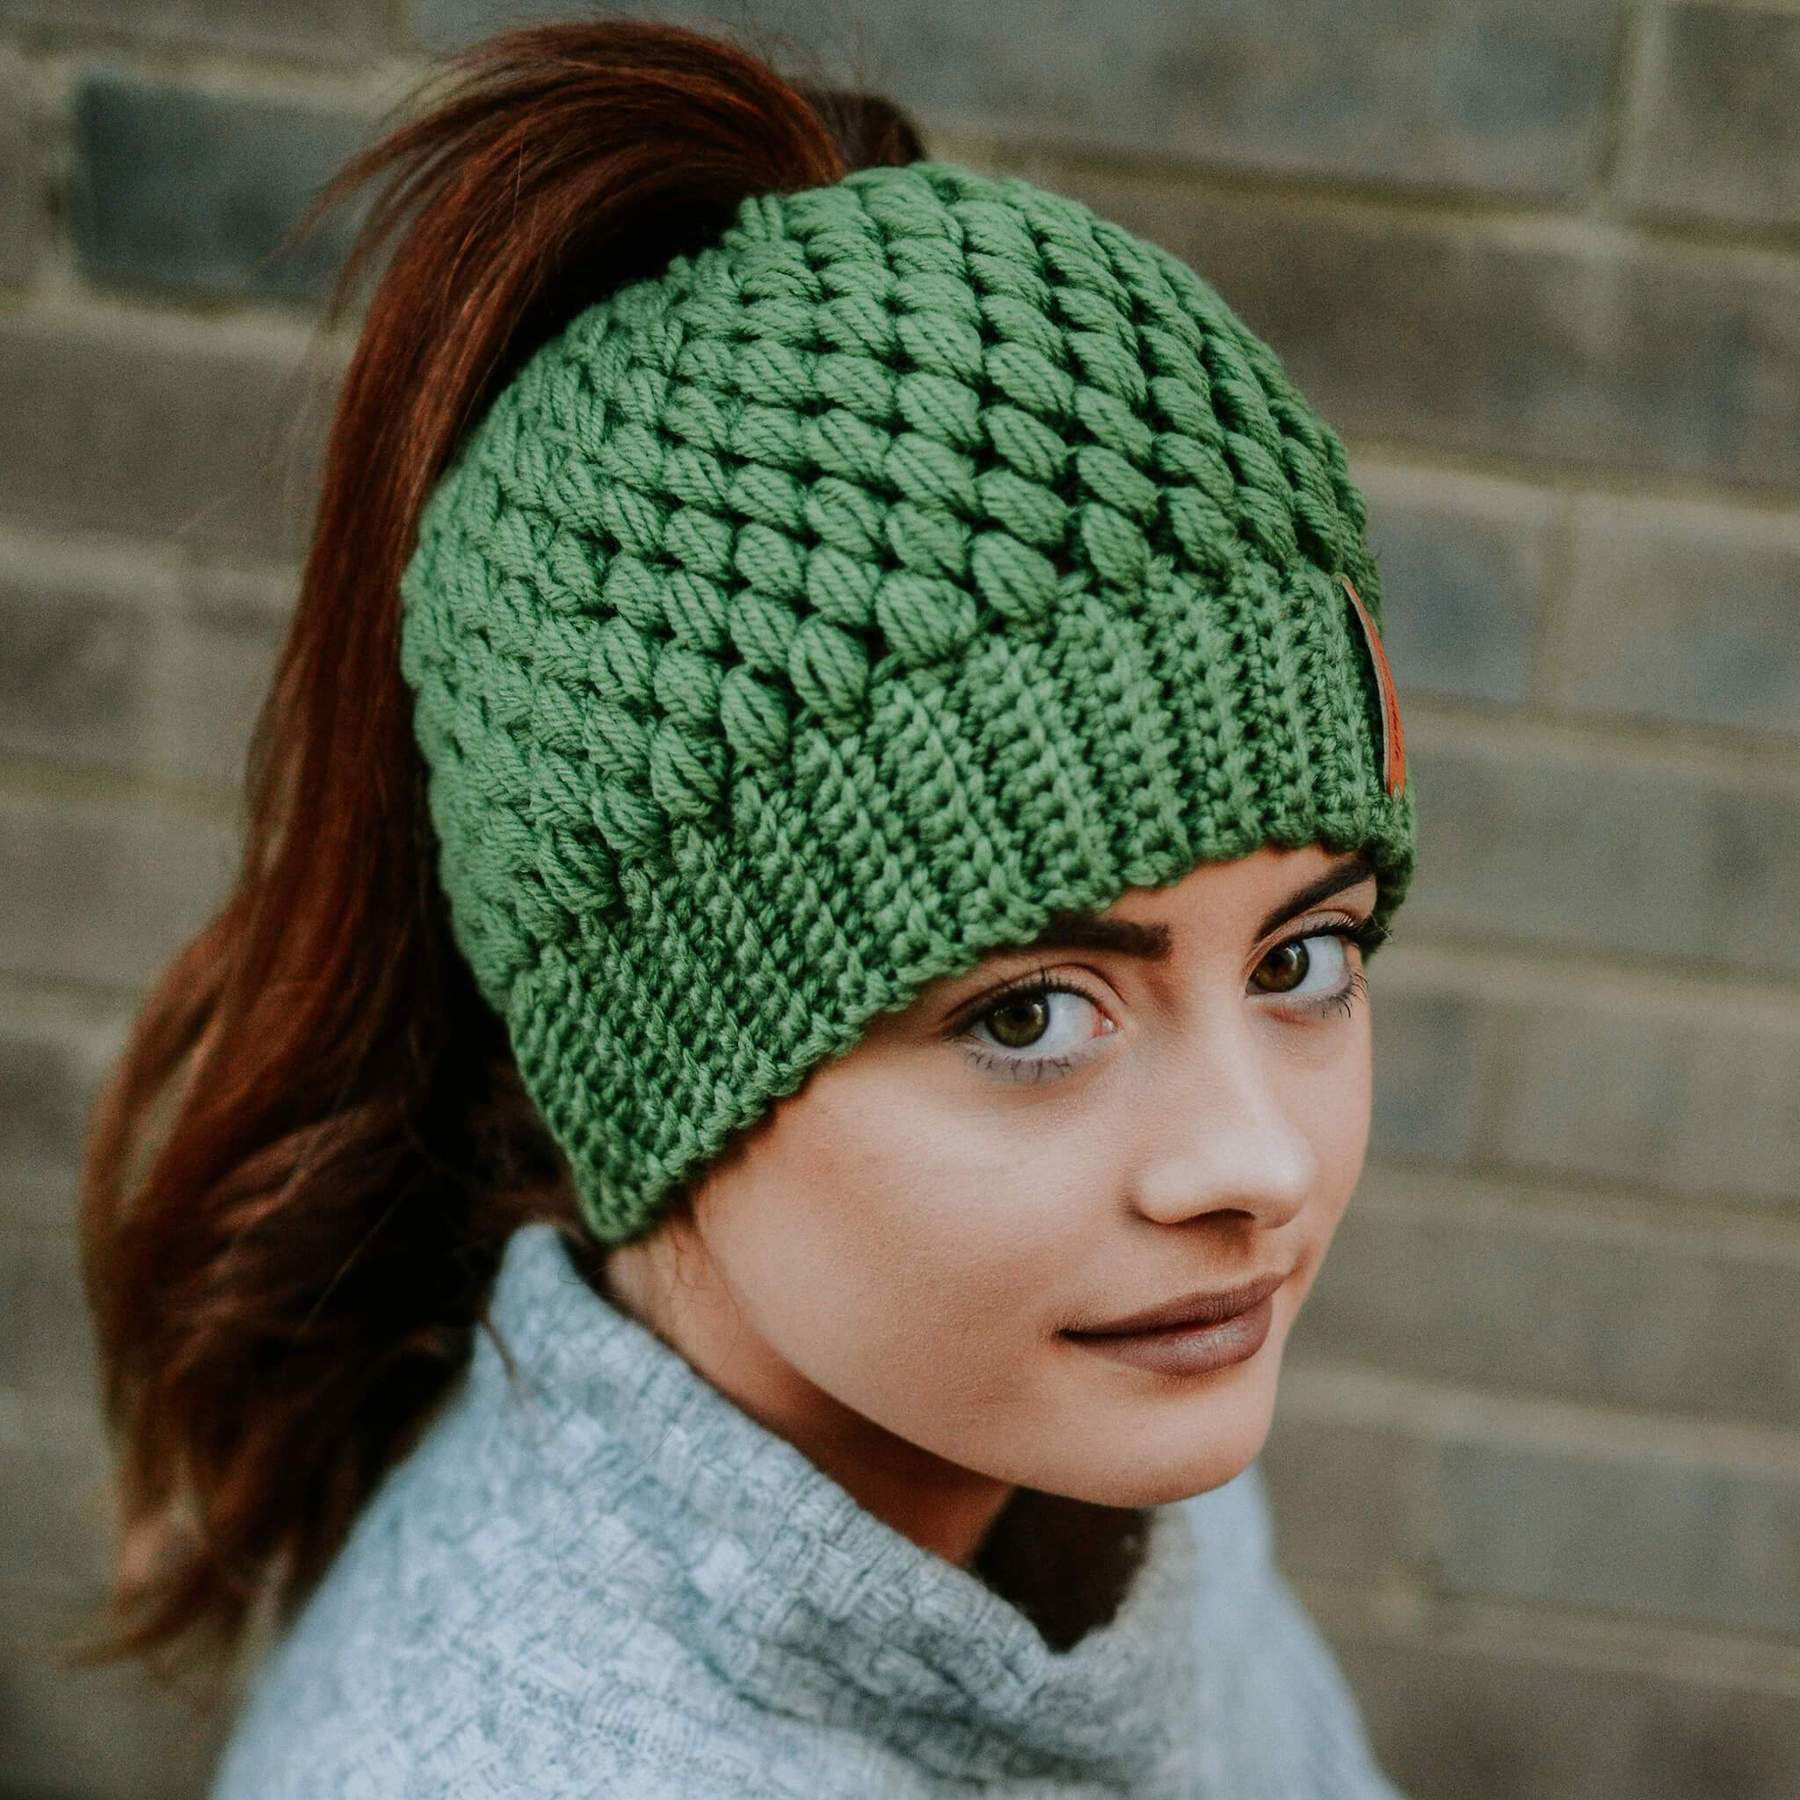 Hand crochet slouchy purple green beanie hat,green hat for women,handmade beanie hat,winter chunky knit hat,chunky knit beanie,slouchy hat